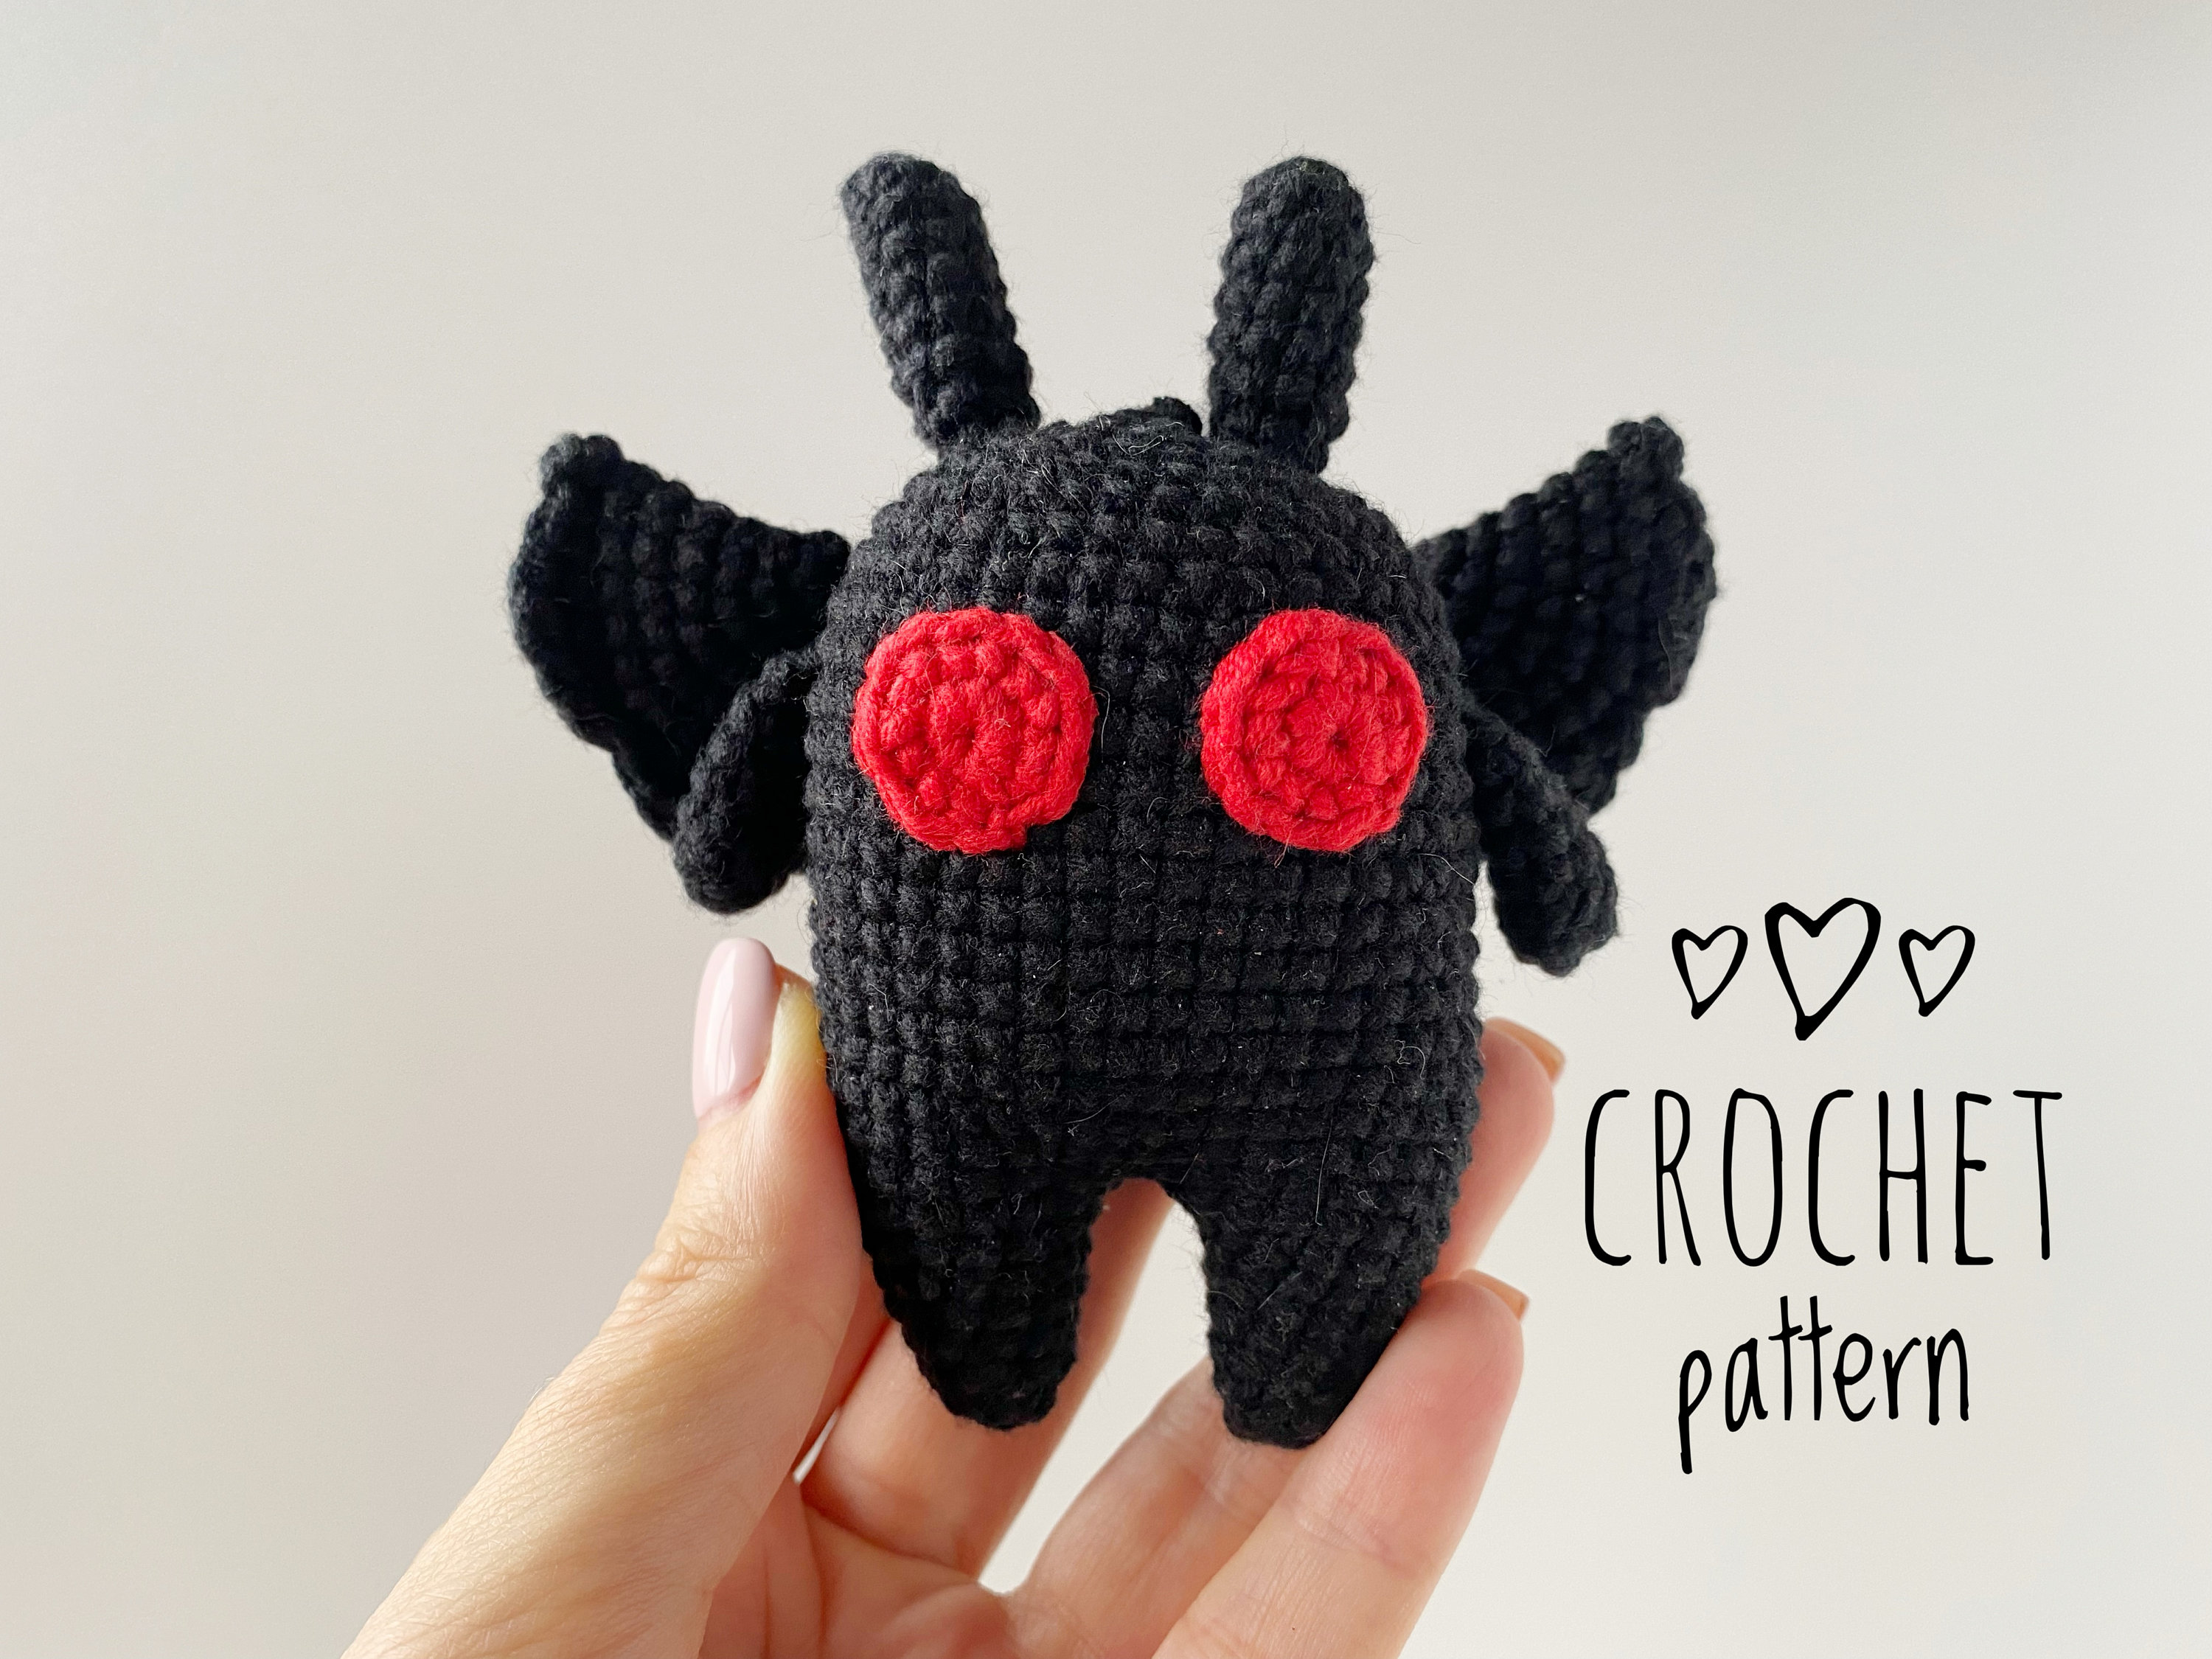 Crochet Plushies 🎃 #plushies #halloween #restock #crochet #kawaii #c